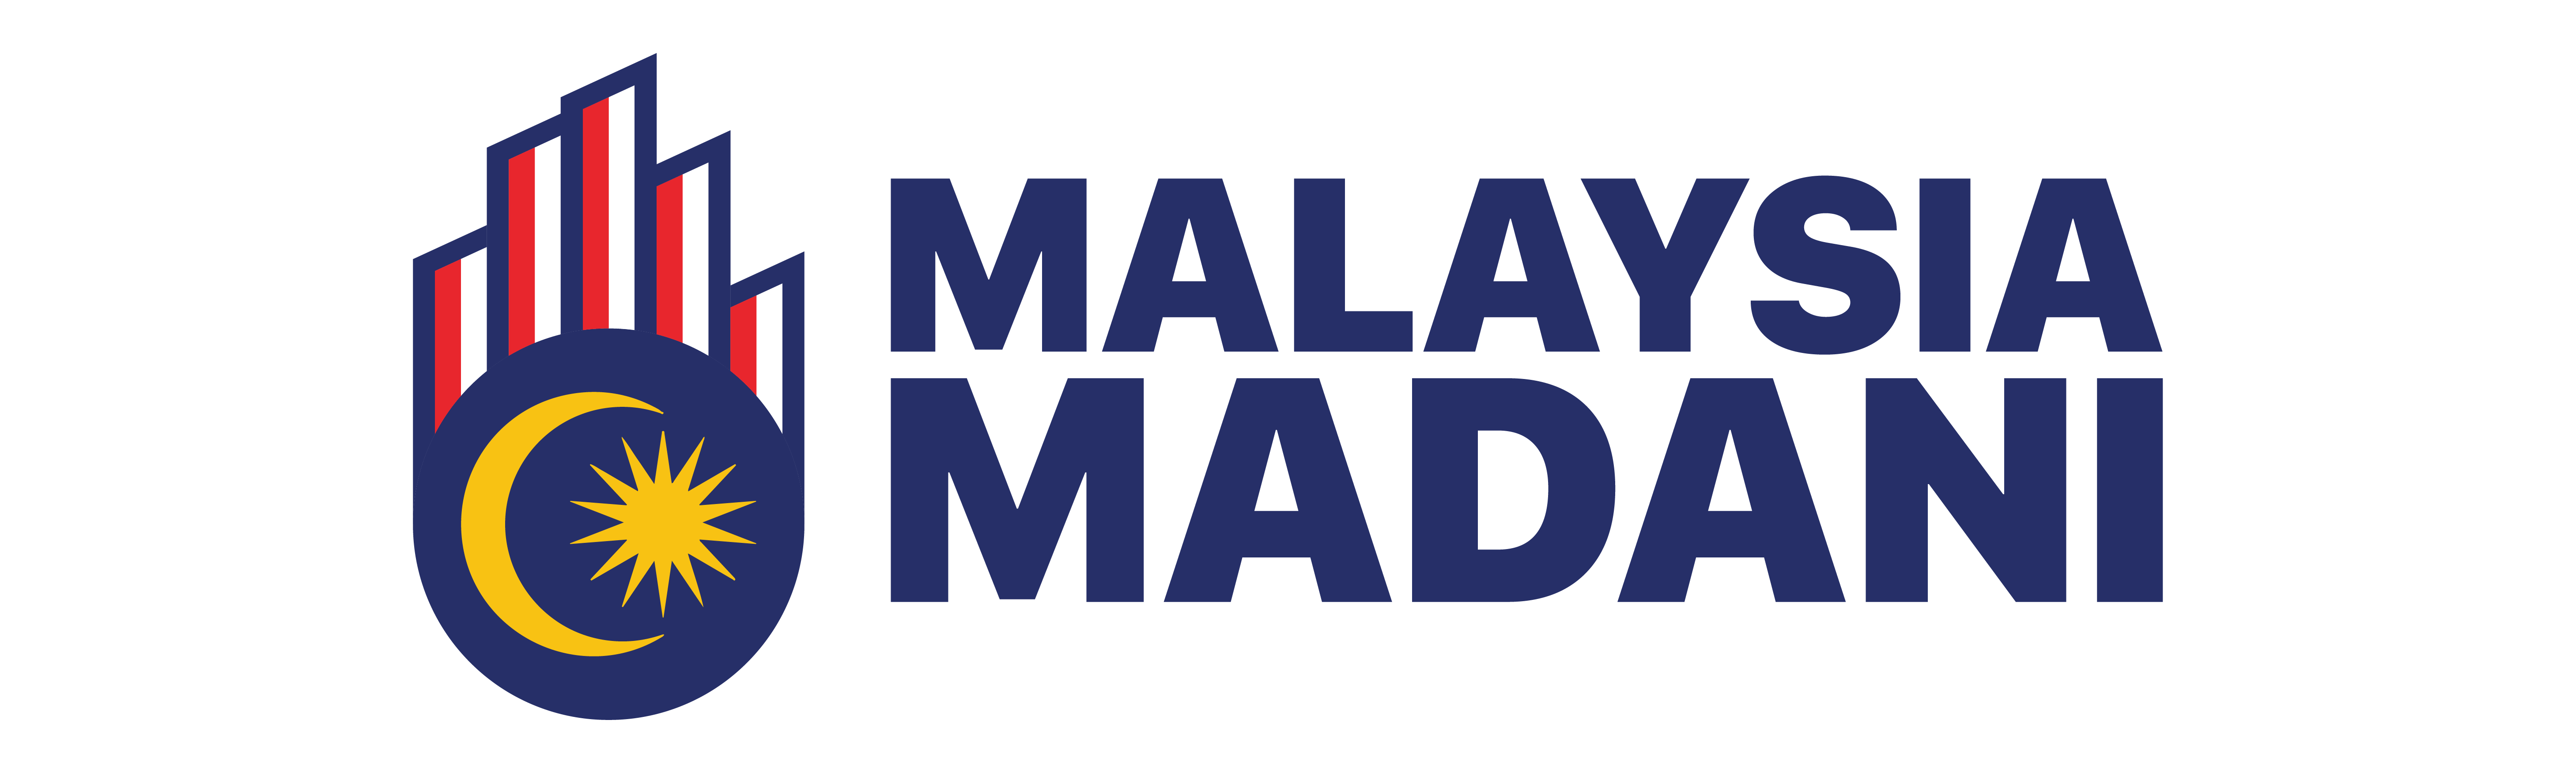 Malaysia MADANI